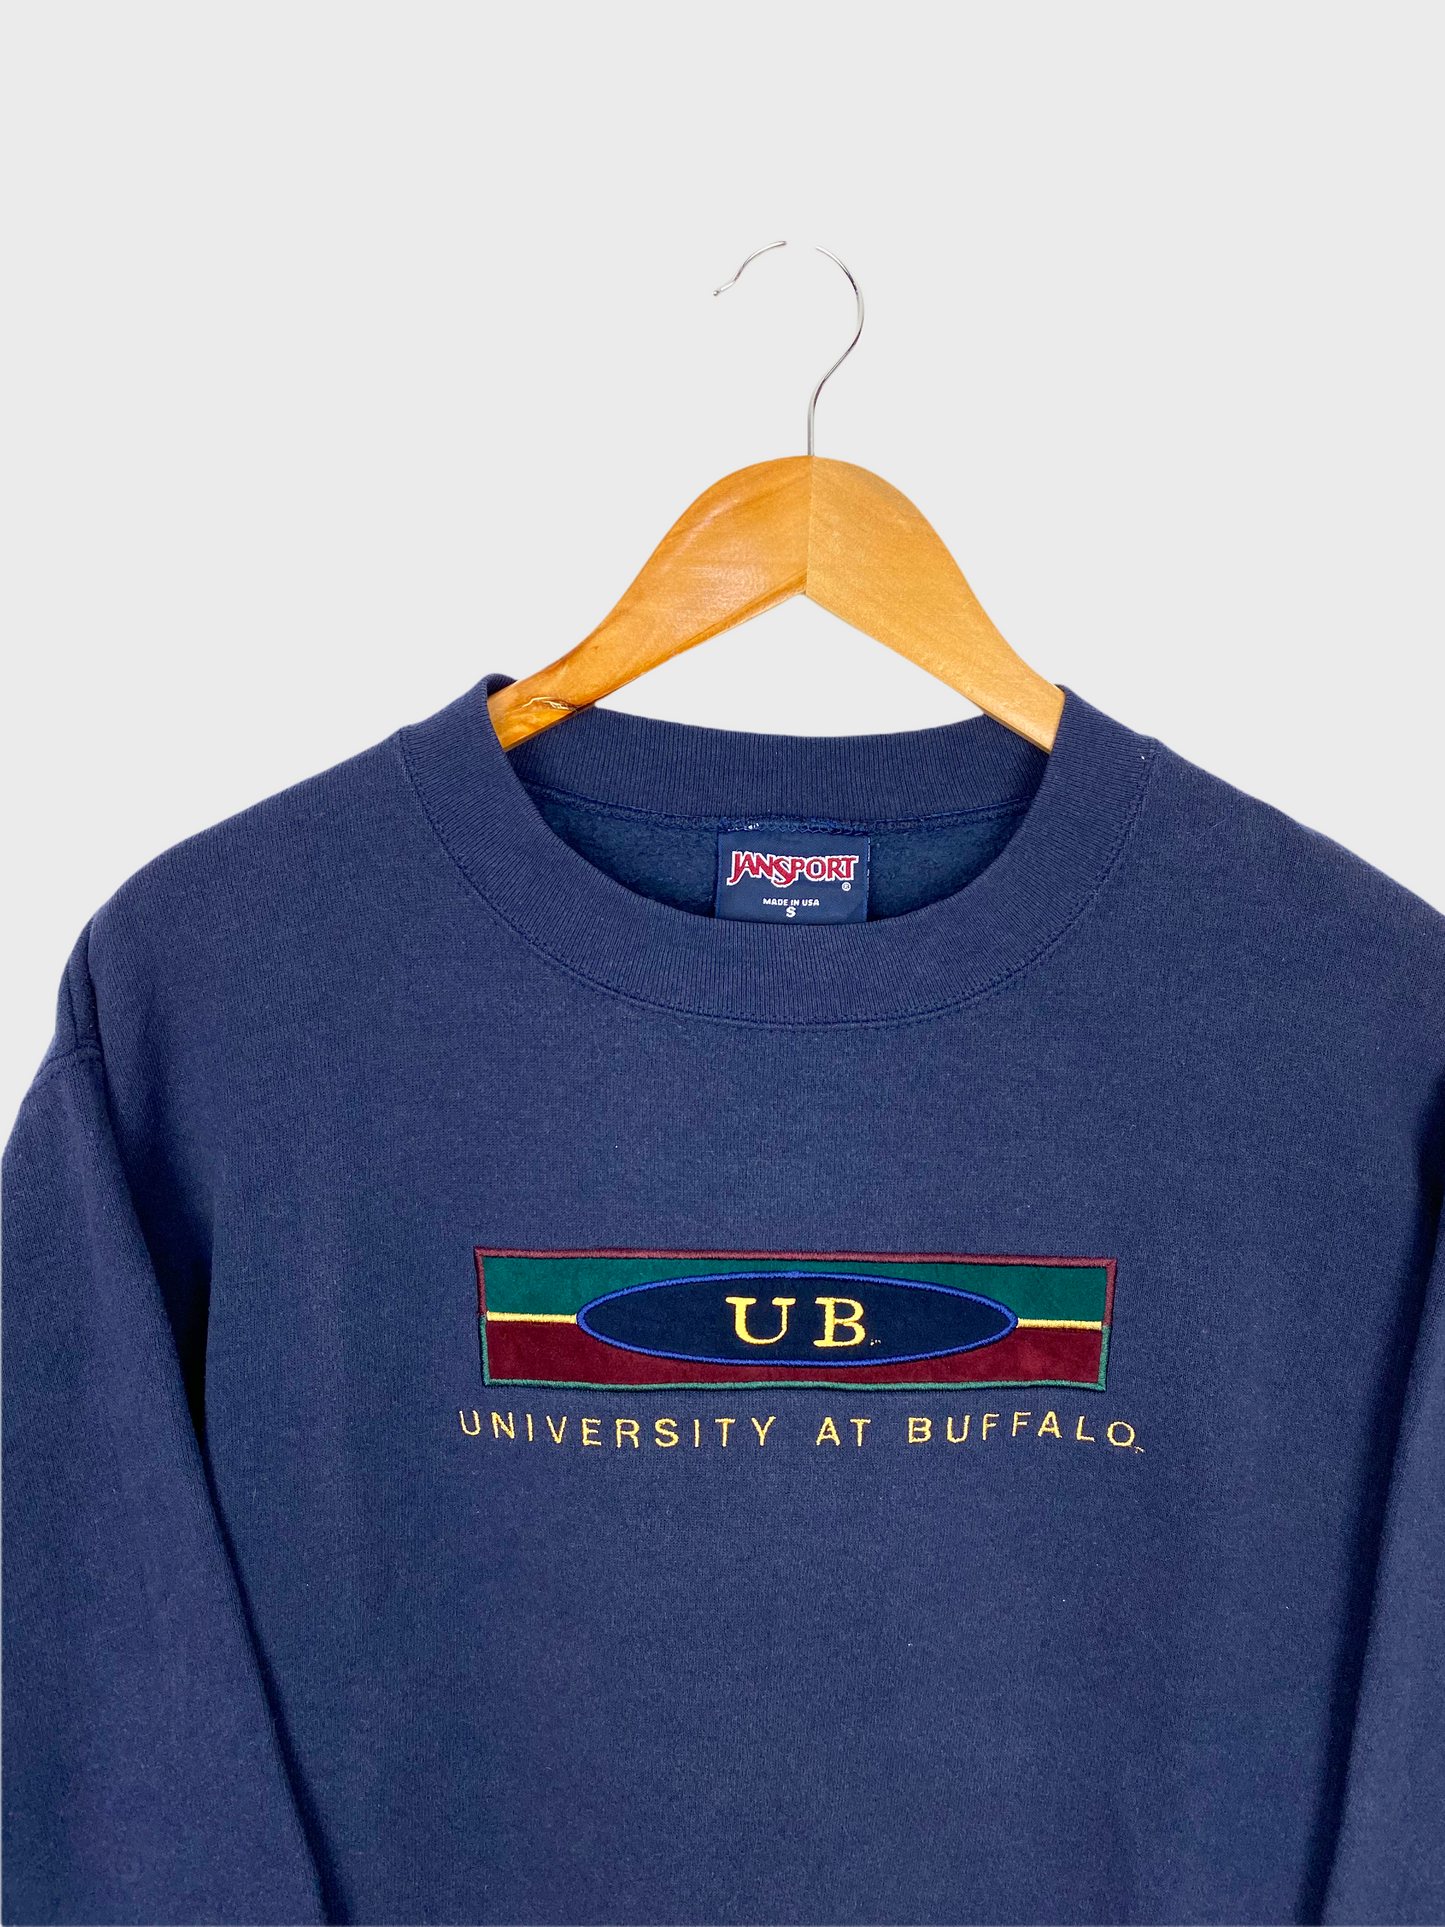 90's Buffalo Uni Embroidered USA Made Jansport Vintage Sweatshirt Size 6-8